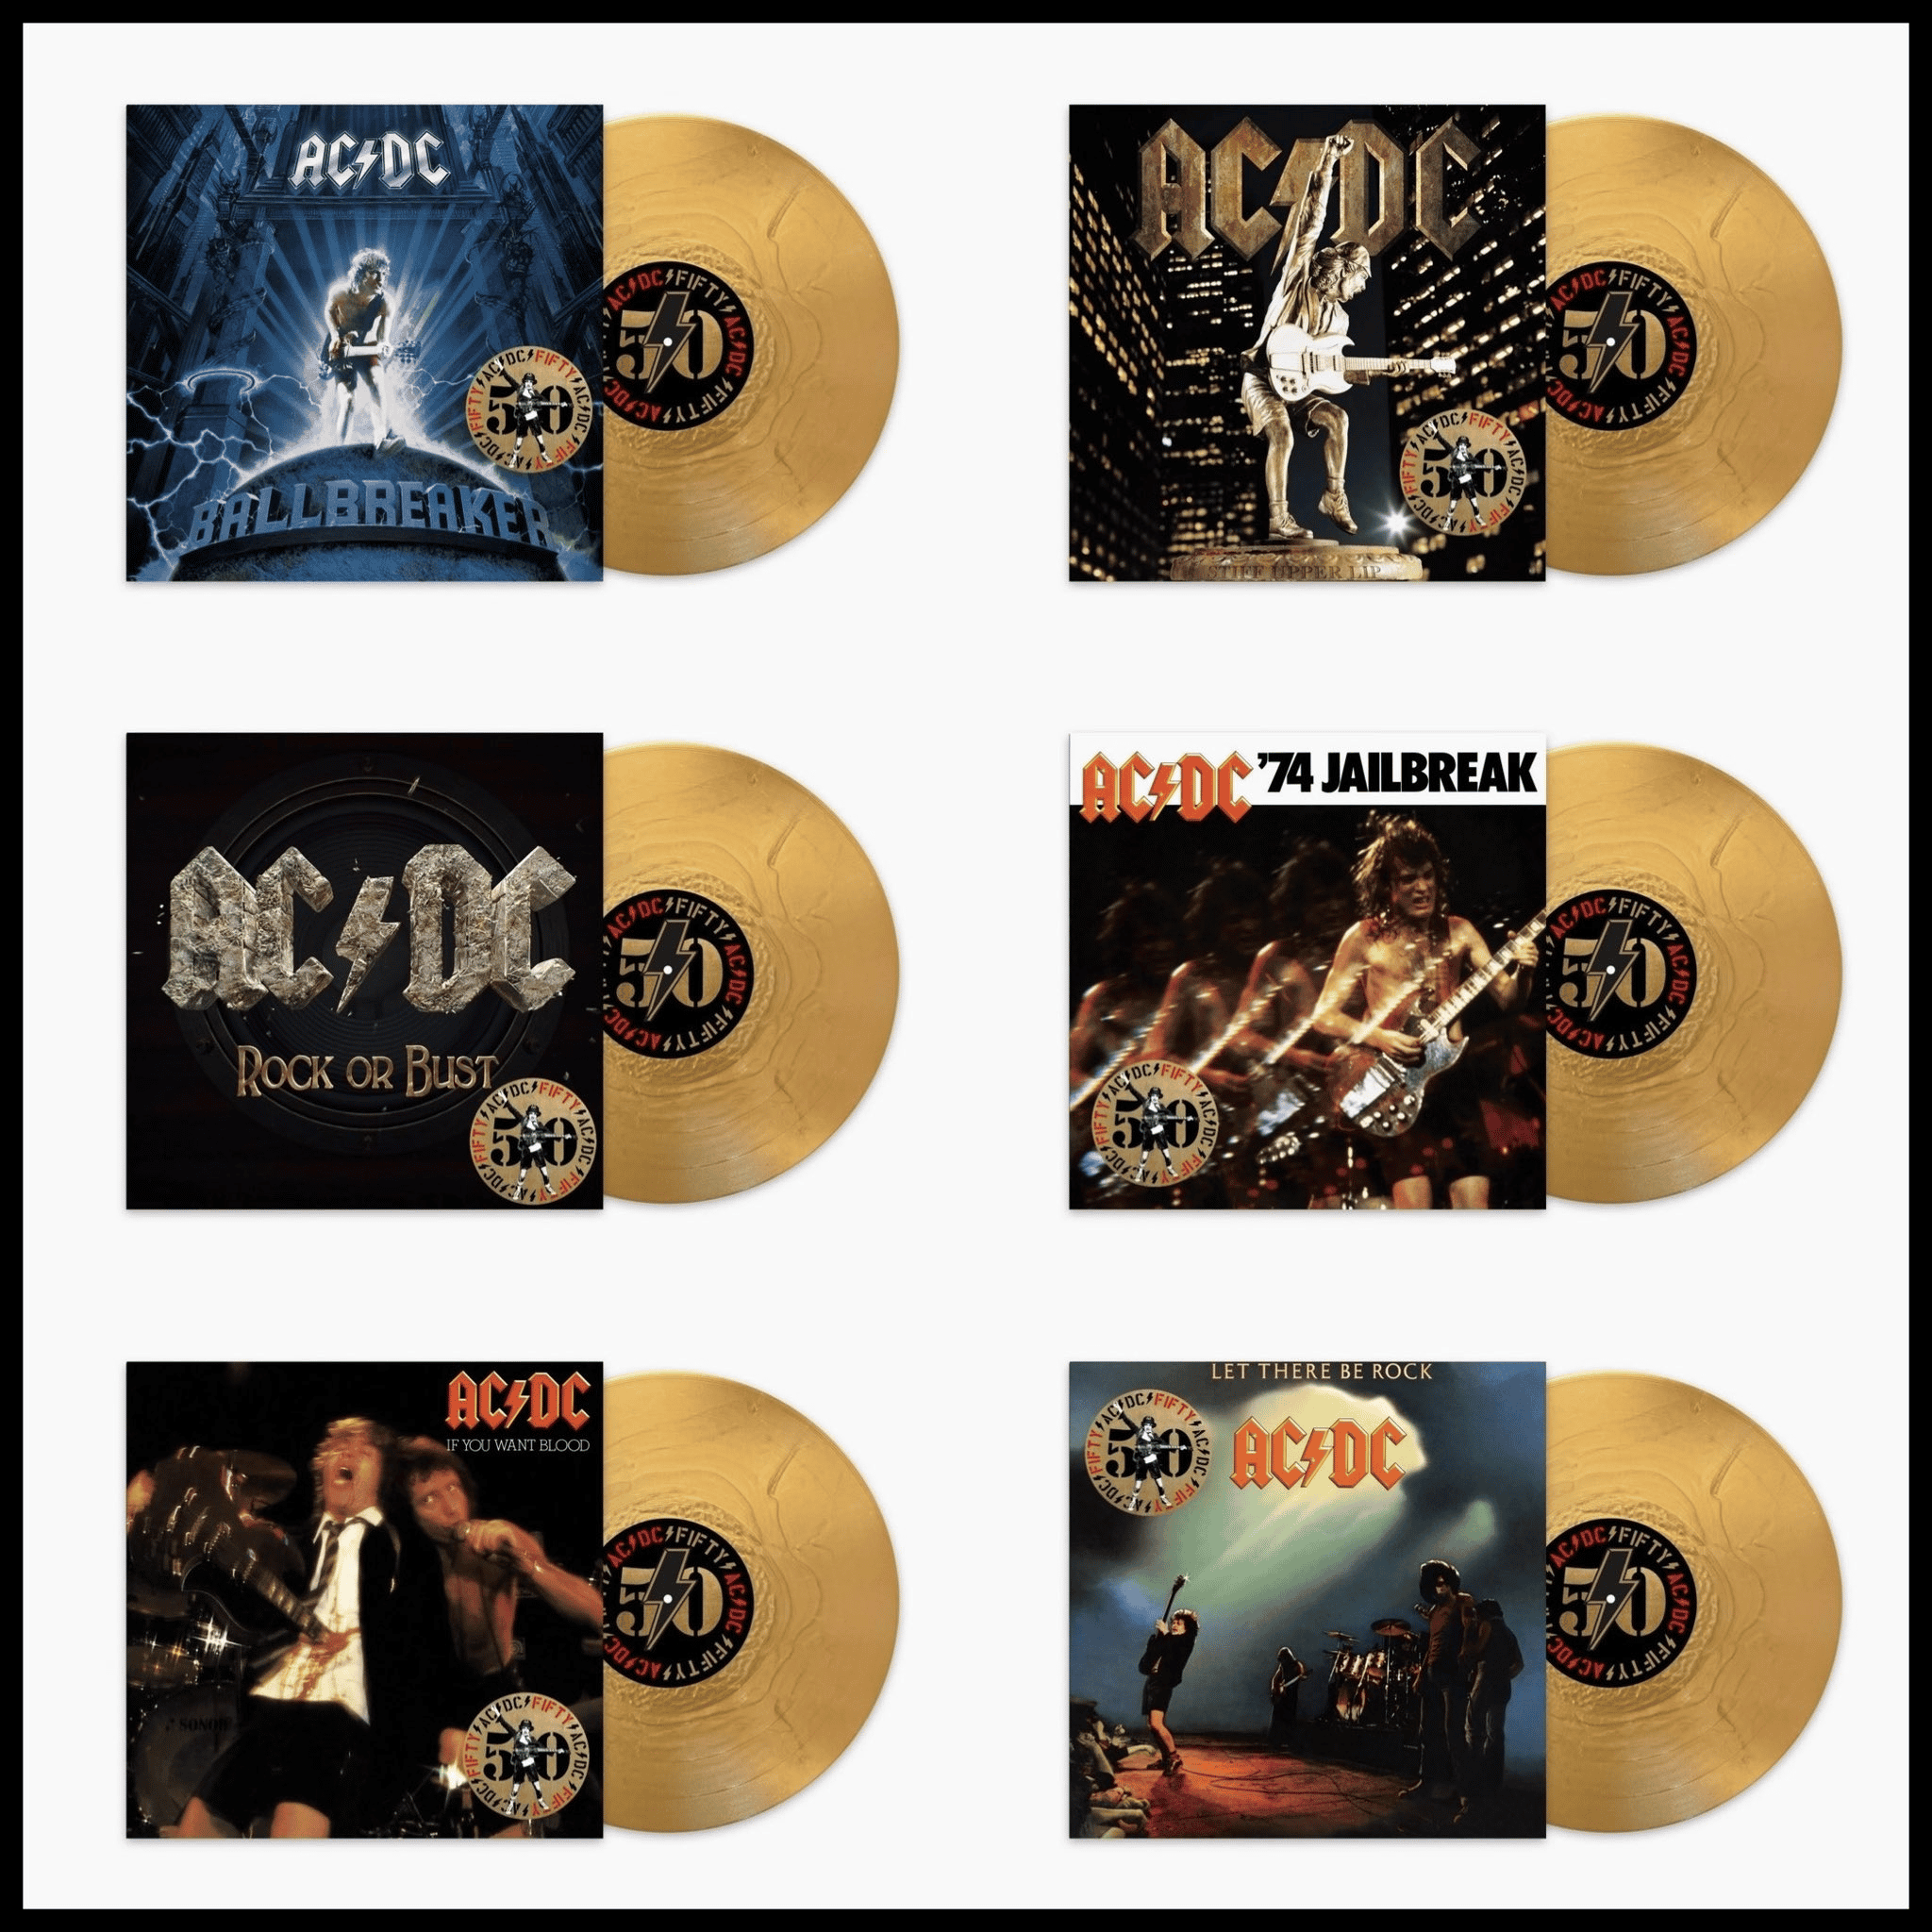 AC/DC - Gold Record Batch 2 Bundle Vinyl